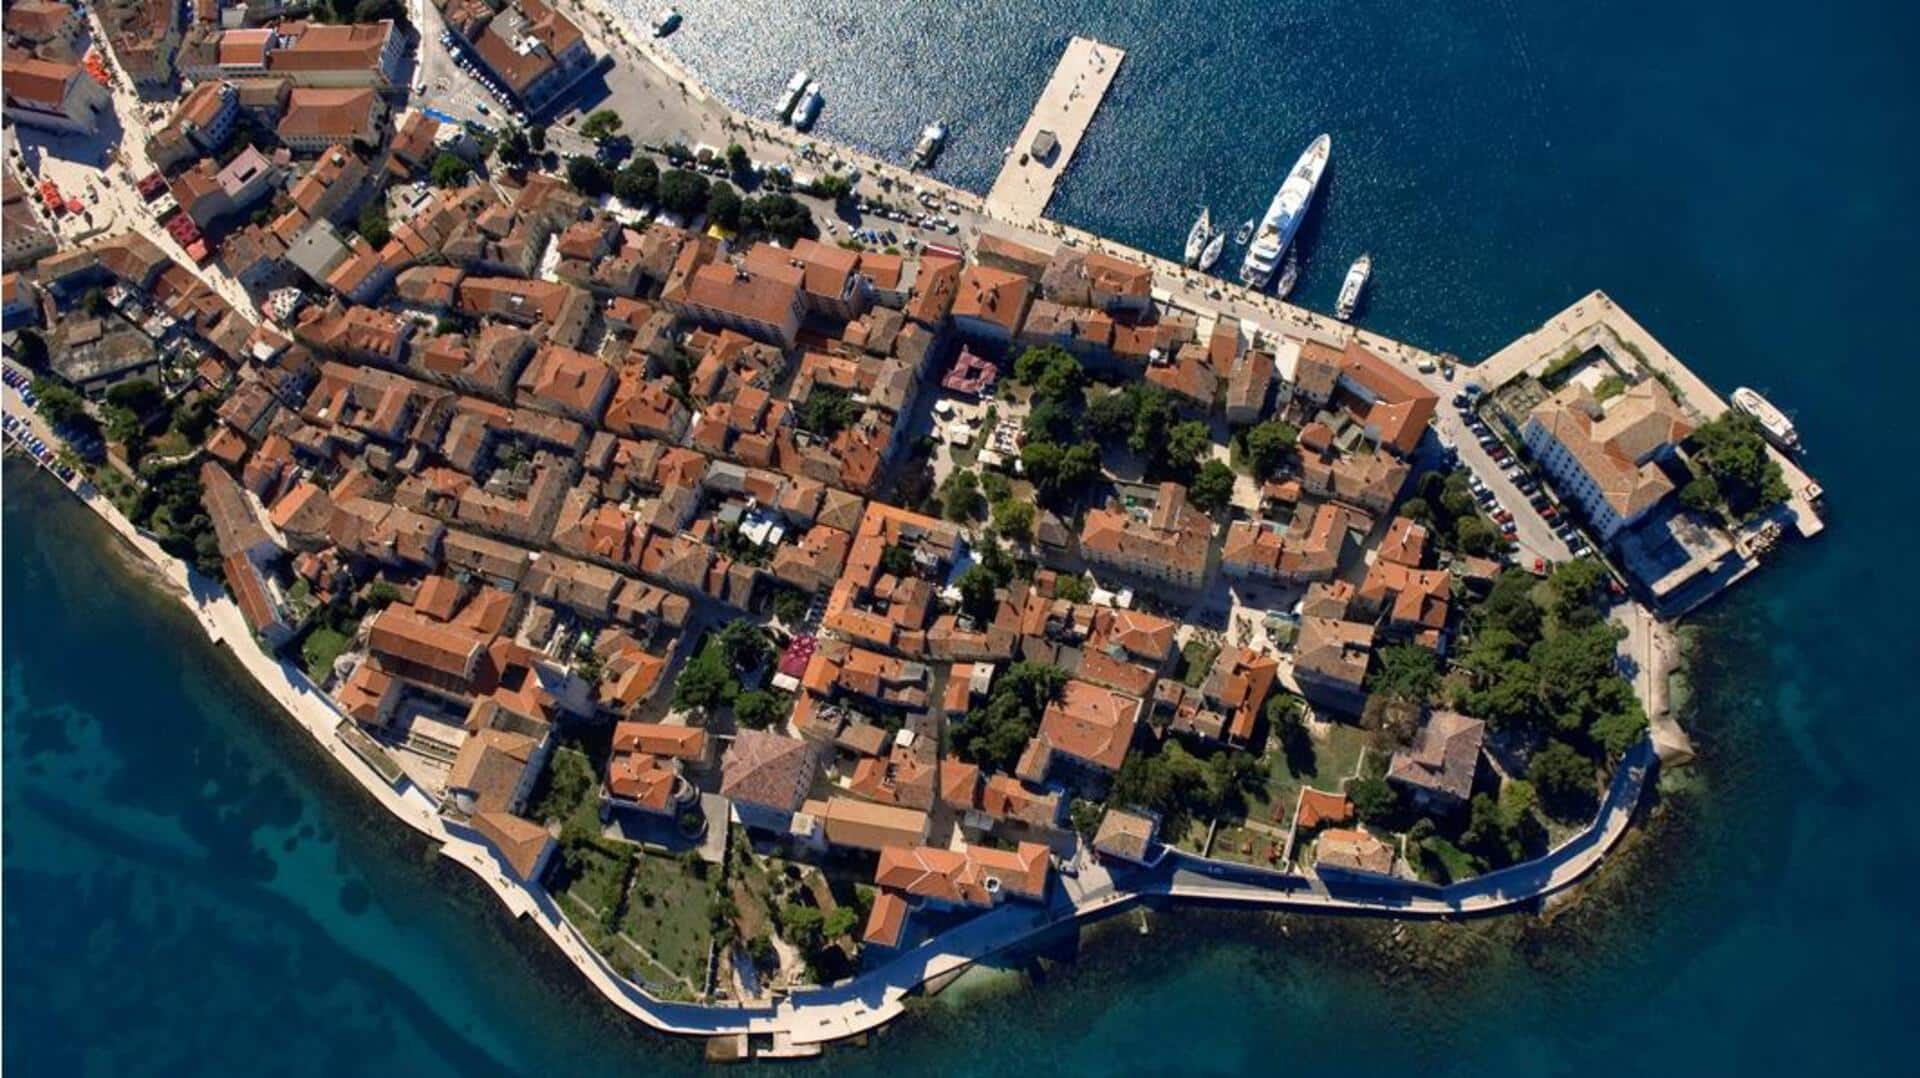 Must-visit historic places in Croatia for a romantic escapade